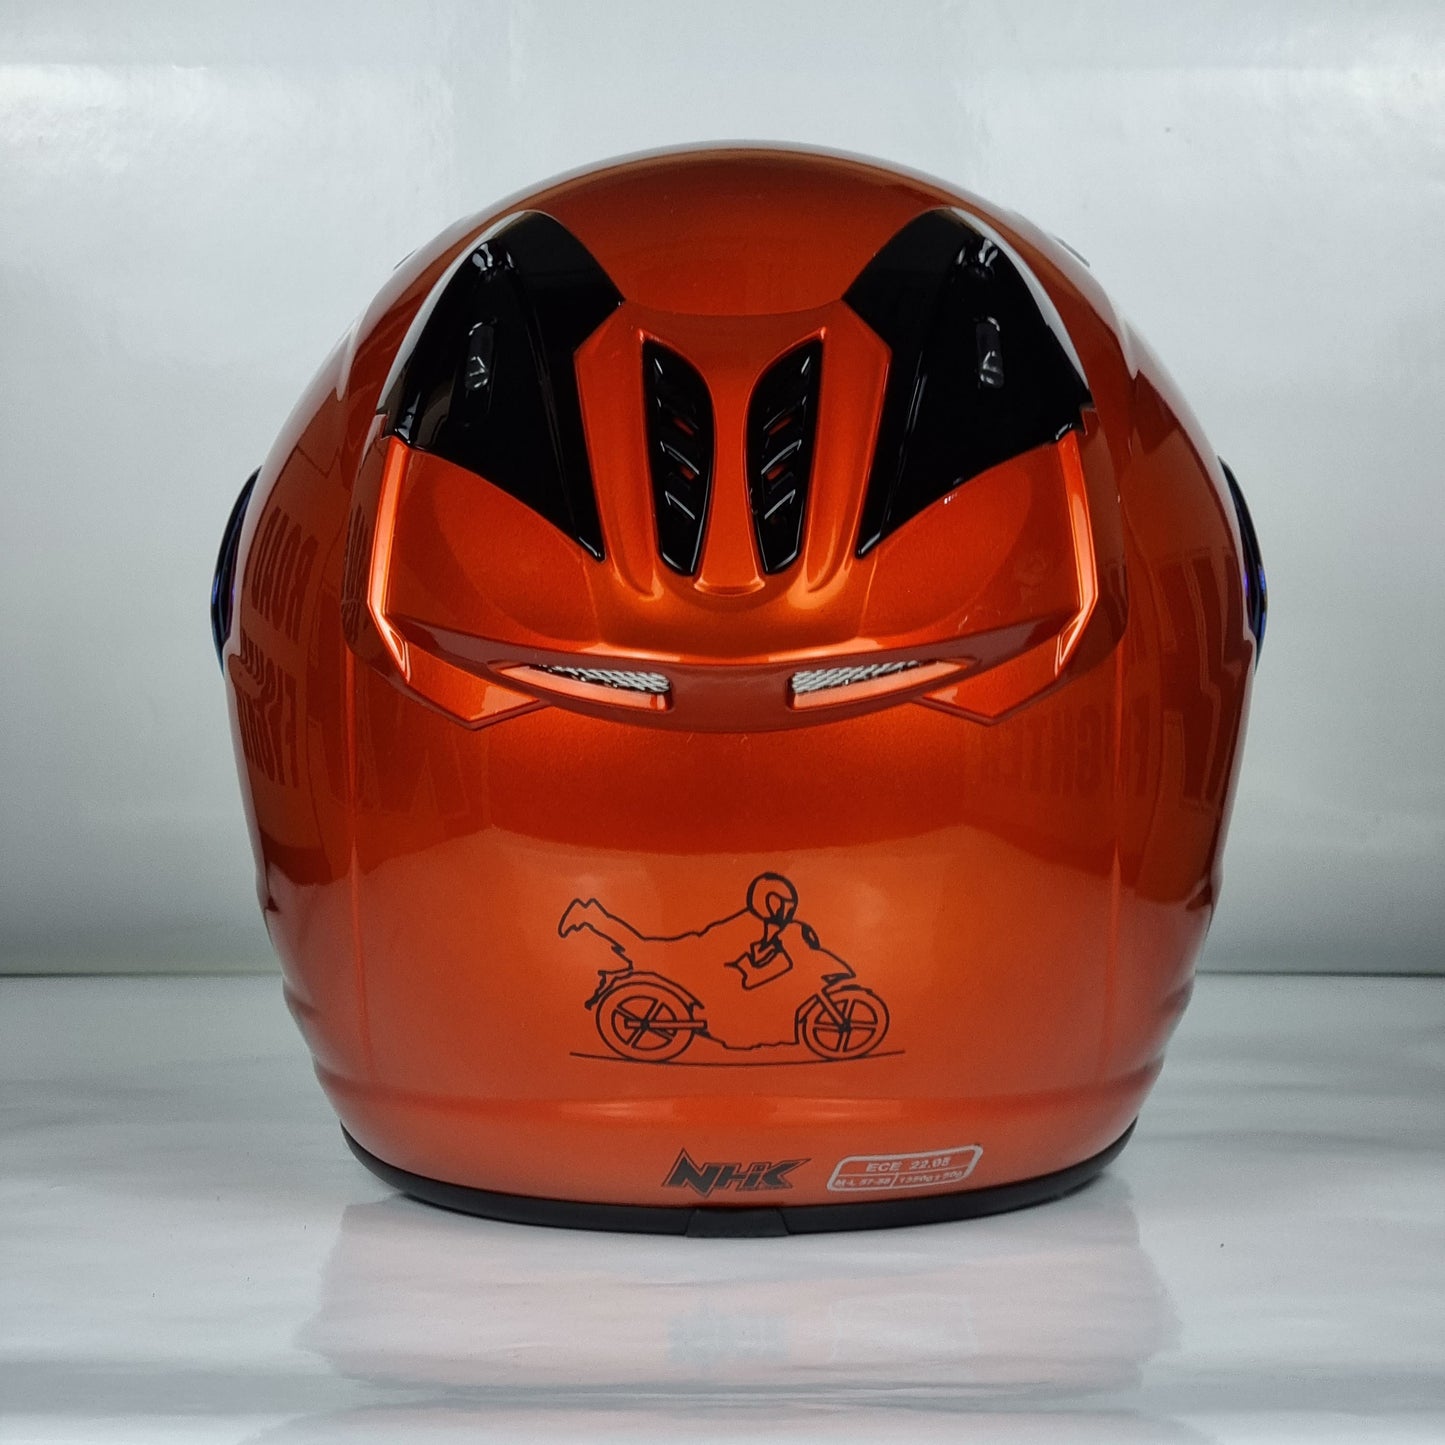 NHK Helmet X SUPERFLY R6 v2 Solid (BM Orange Glossy)